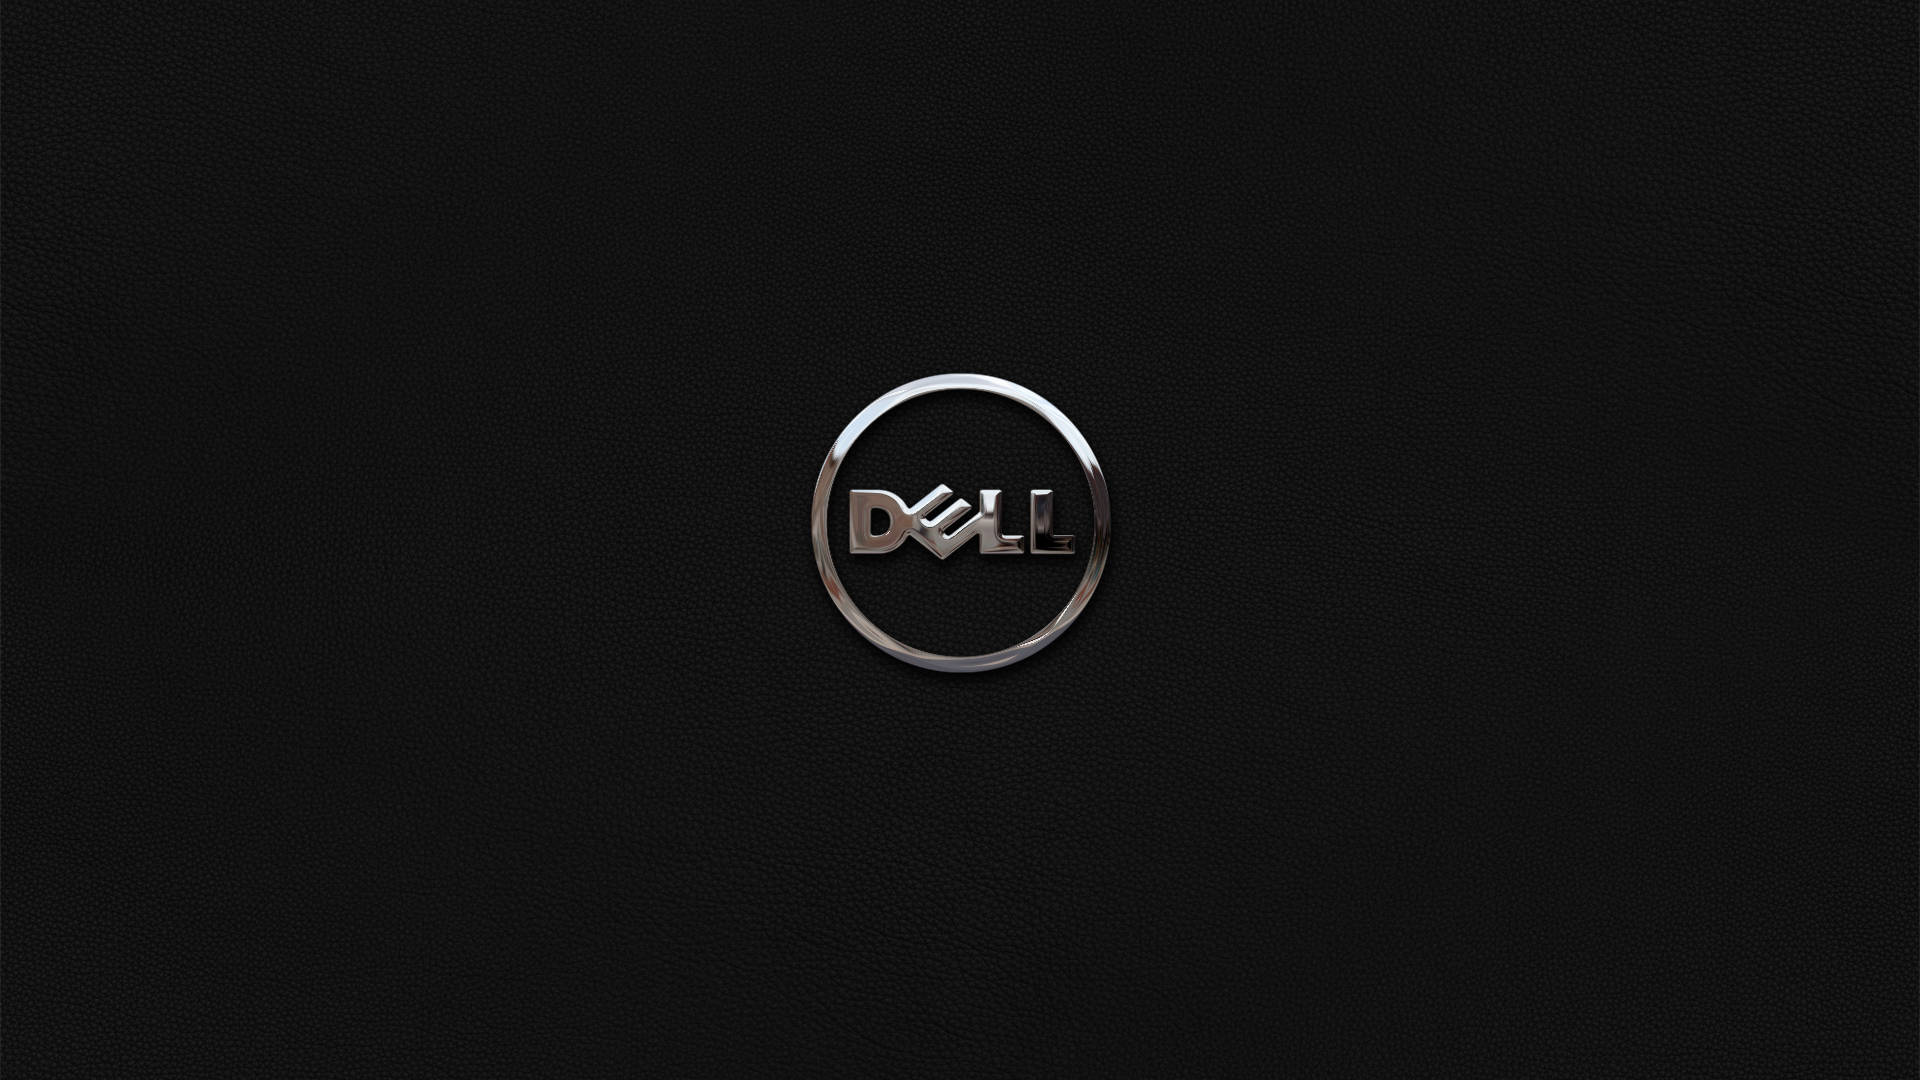 Metallic Dell Hd-logo Wallpaper